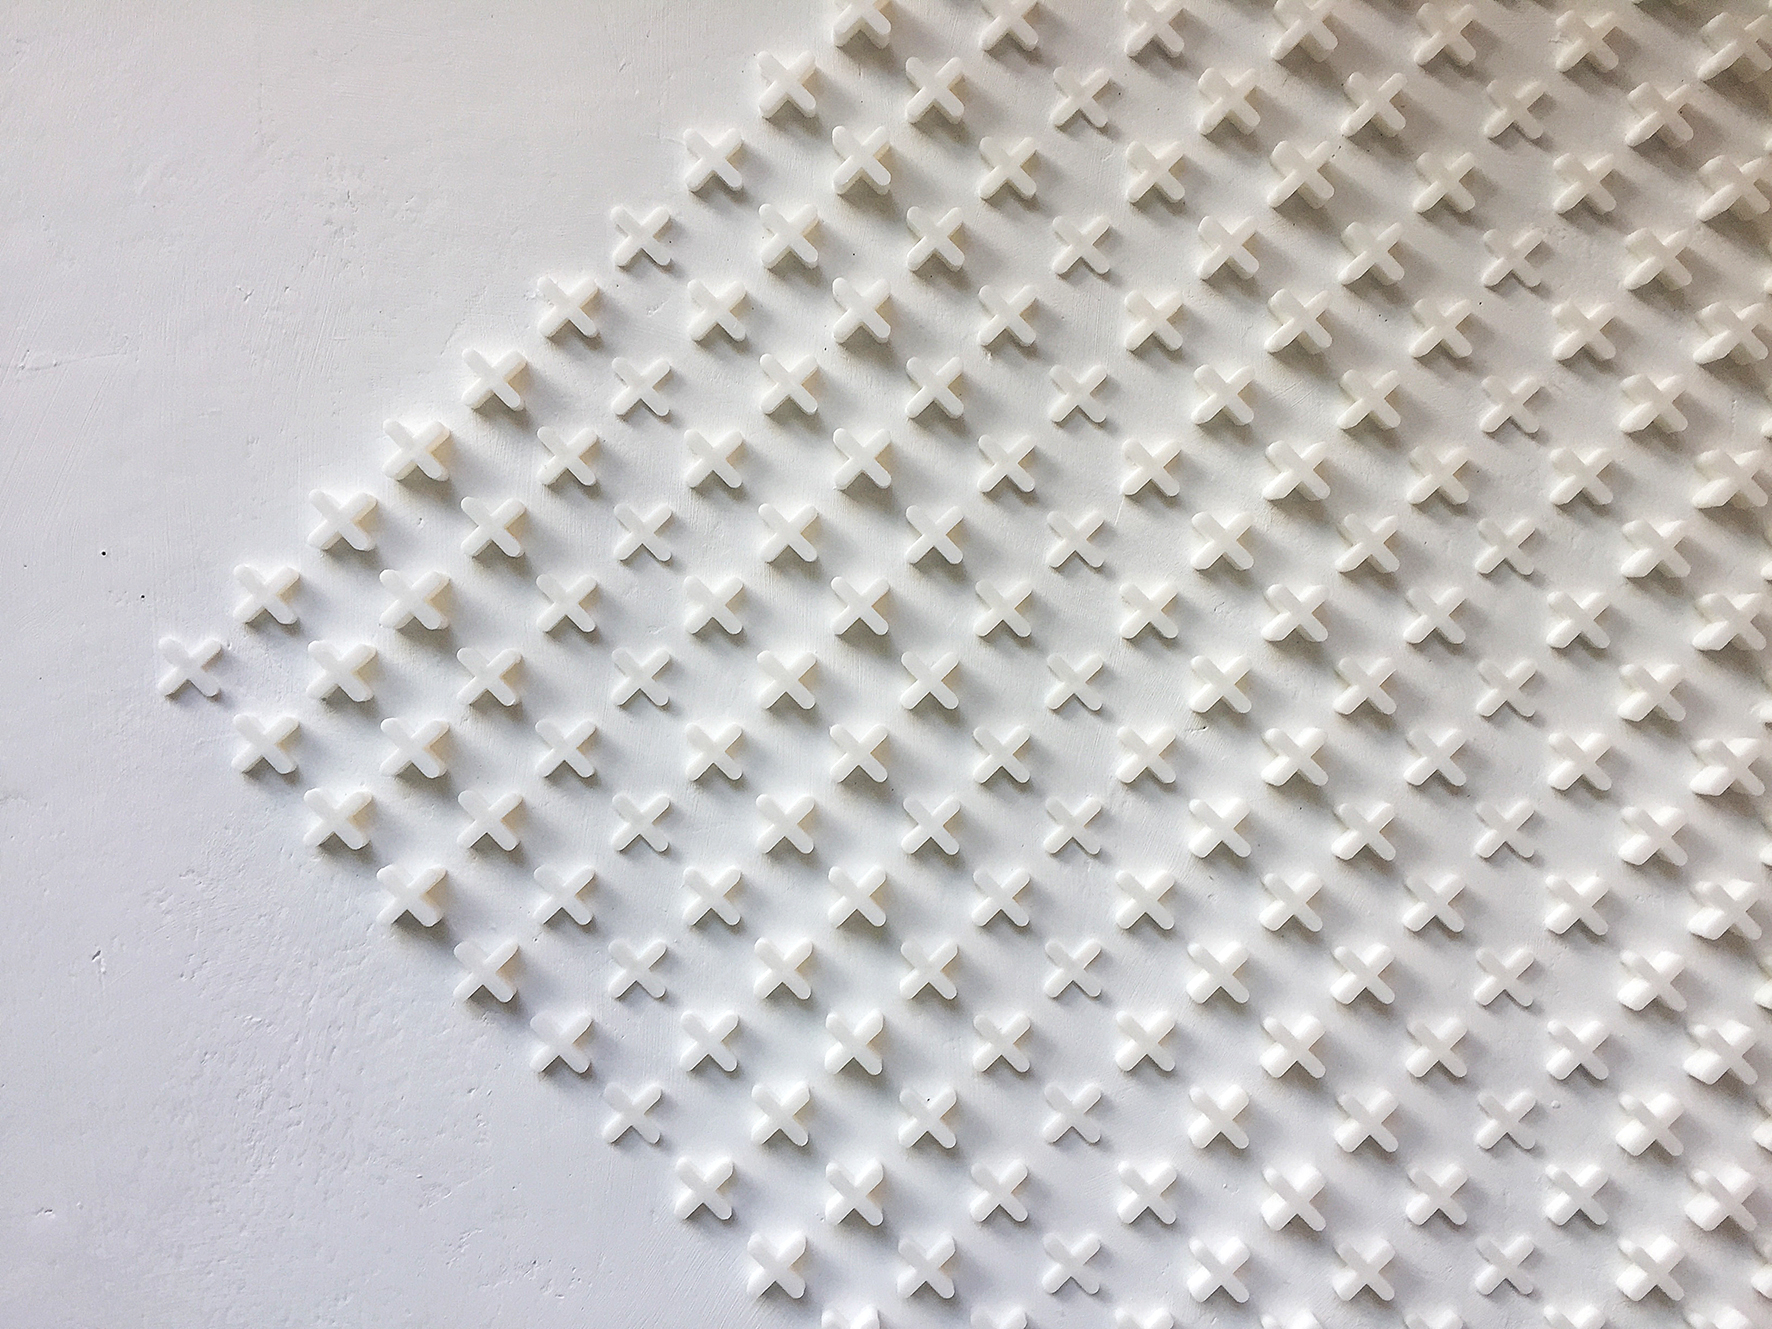 1,274 tile spacers (detail)